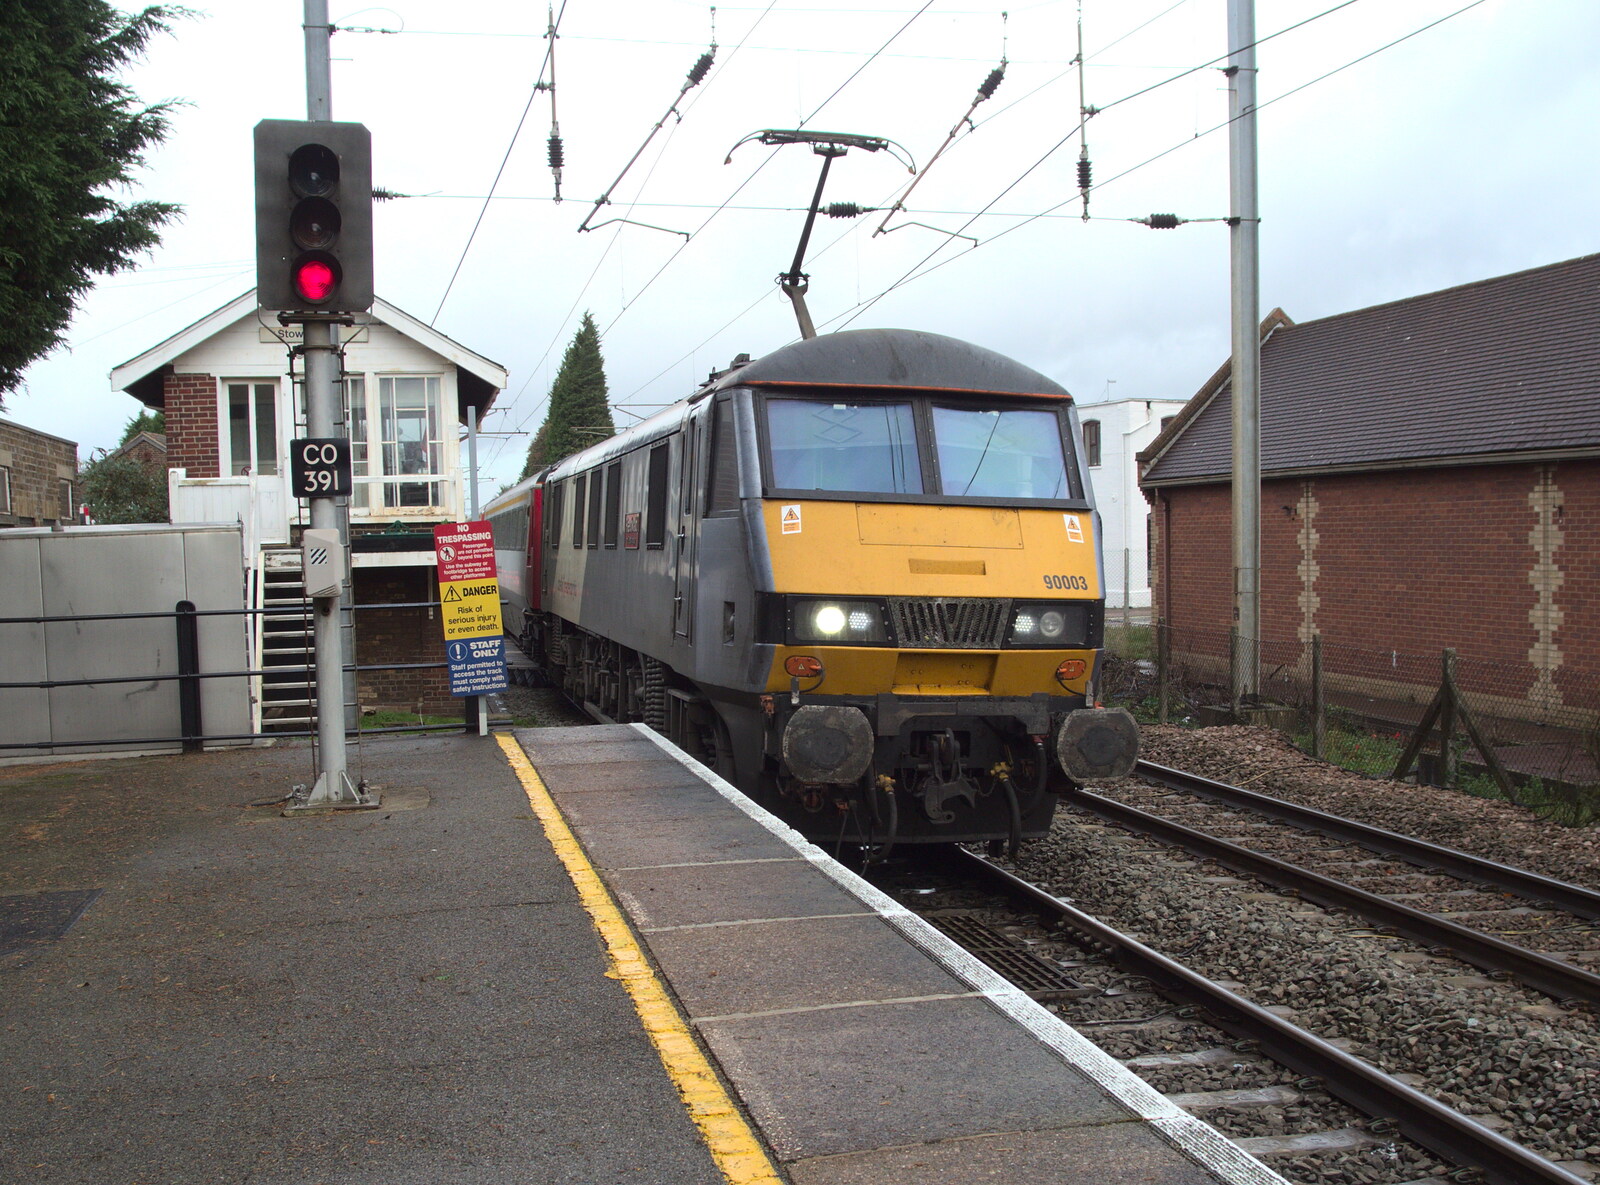 90003 Raedwald passes the broken train from (Very) Long Train (Not) Running, Stowmarket, Suffolk - 21st October 2014